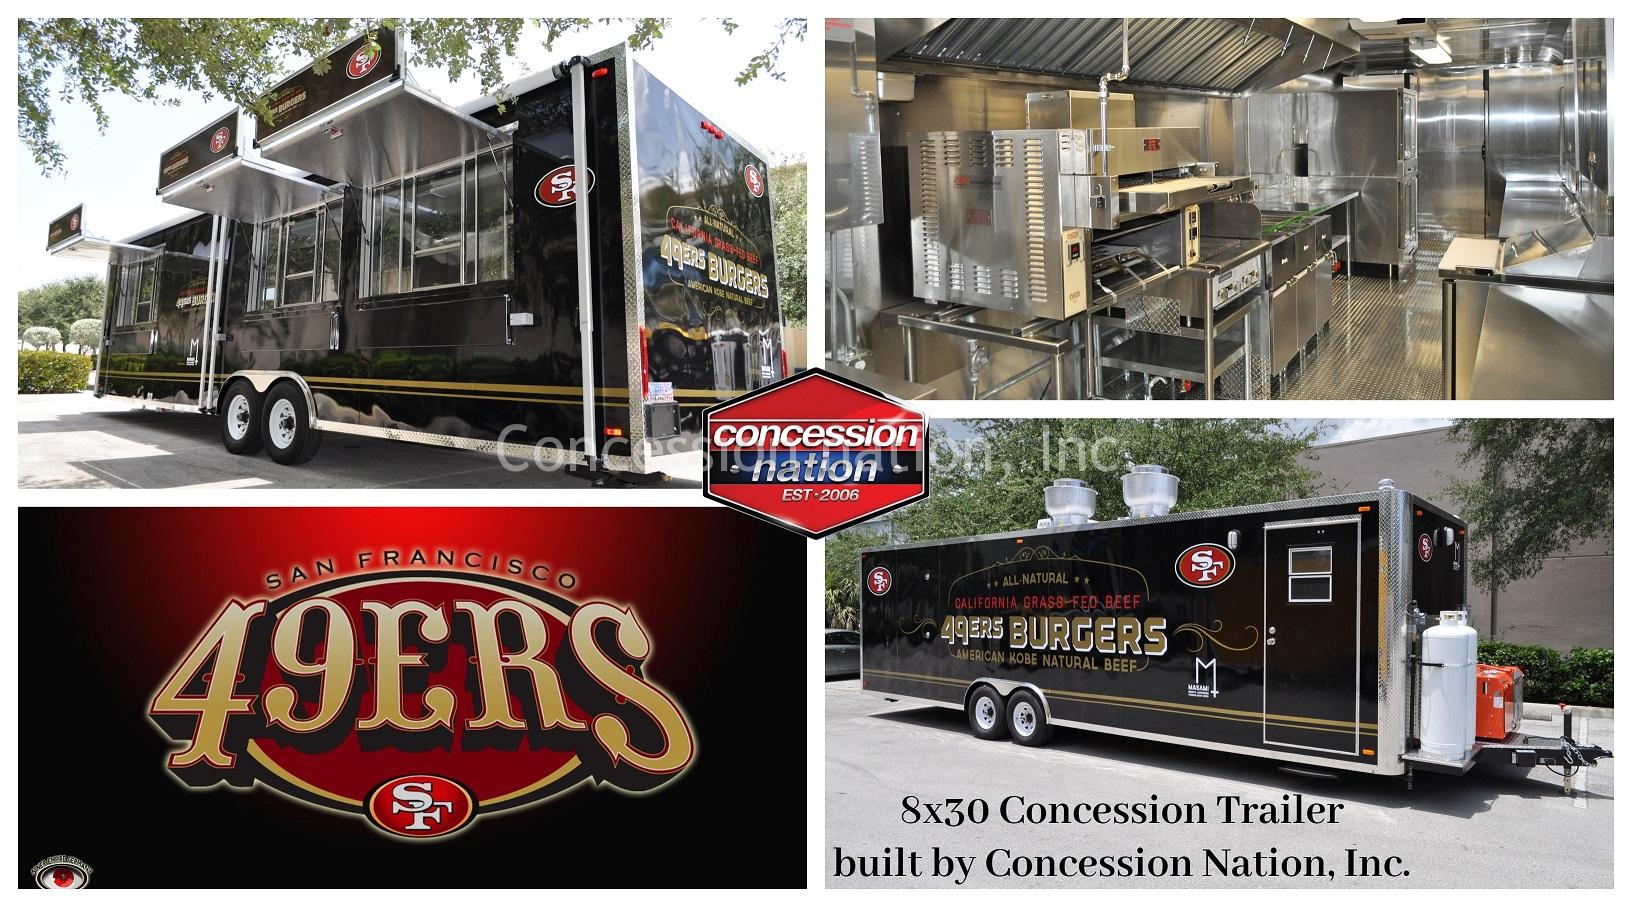 San Francisco 49ers Concession Trailer